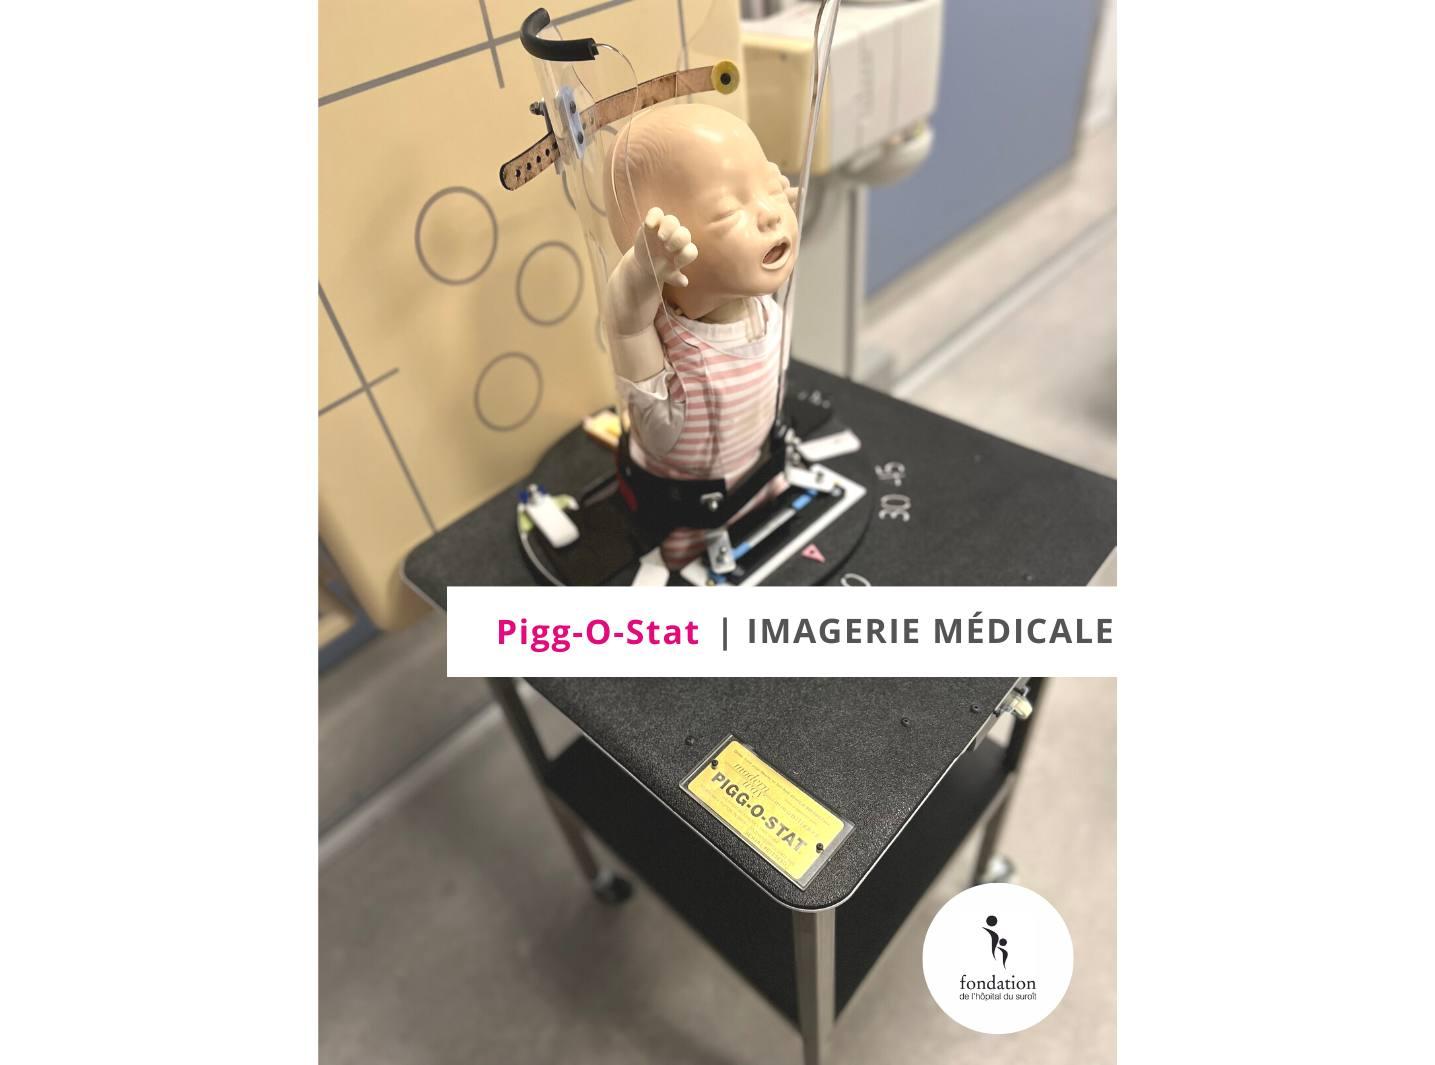 Pigg-O-Stat-Imagerie-médicale-Hôpital-Suroît-Fondation_Site-Web.jpg#asset:2871